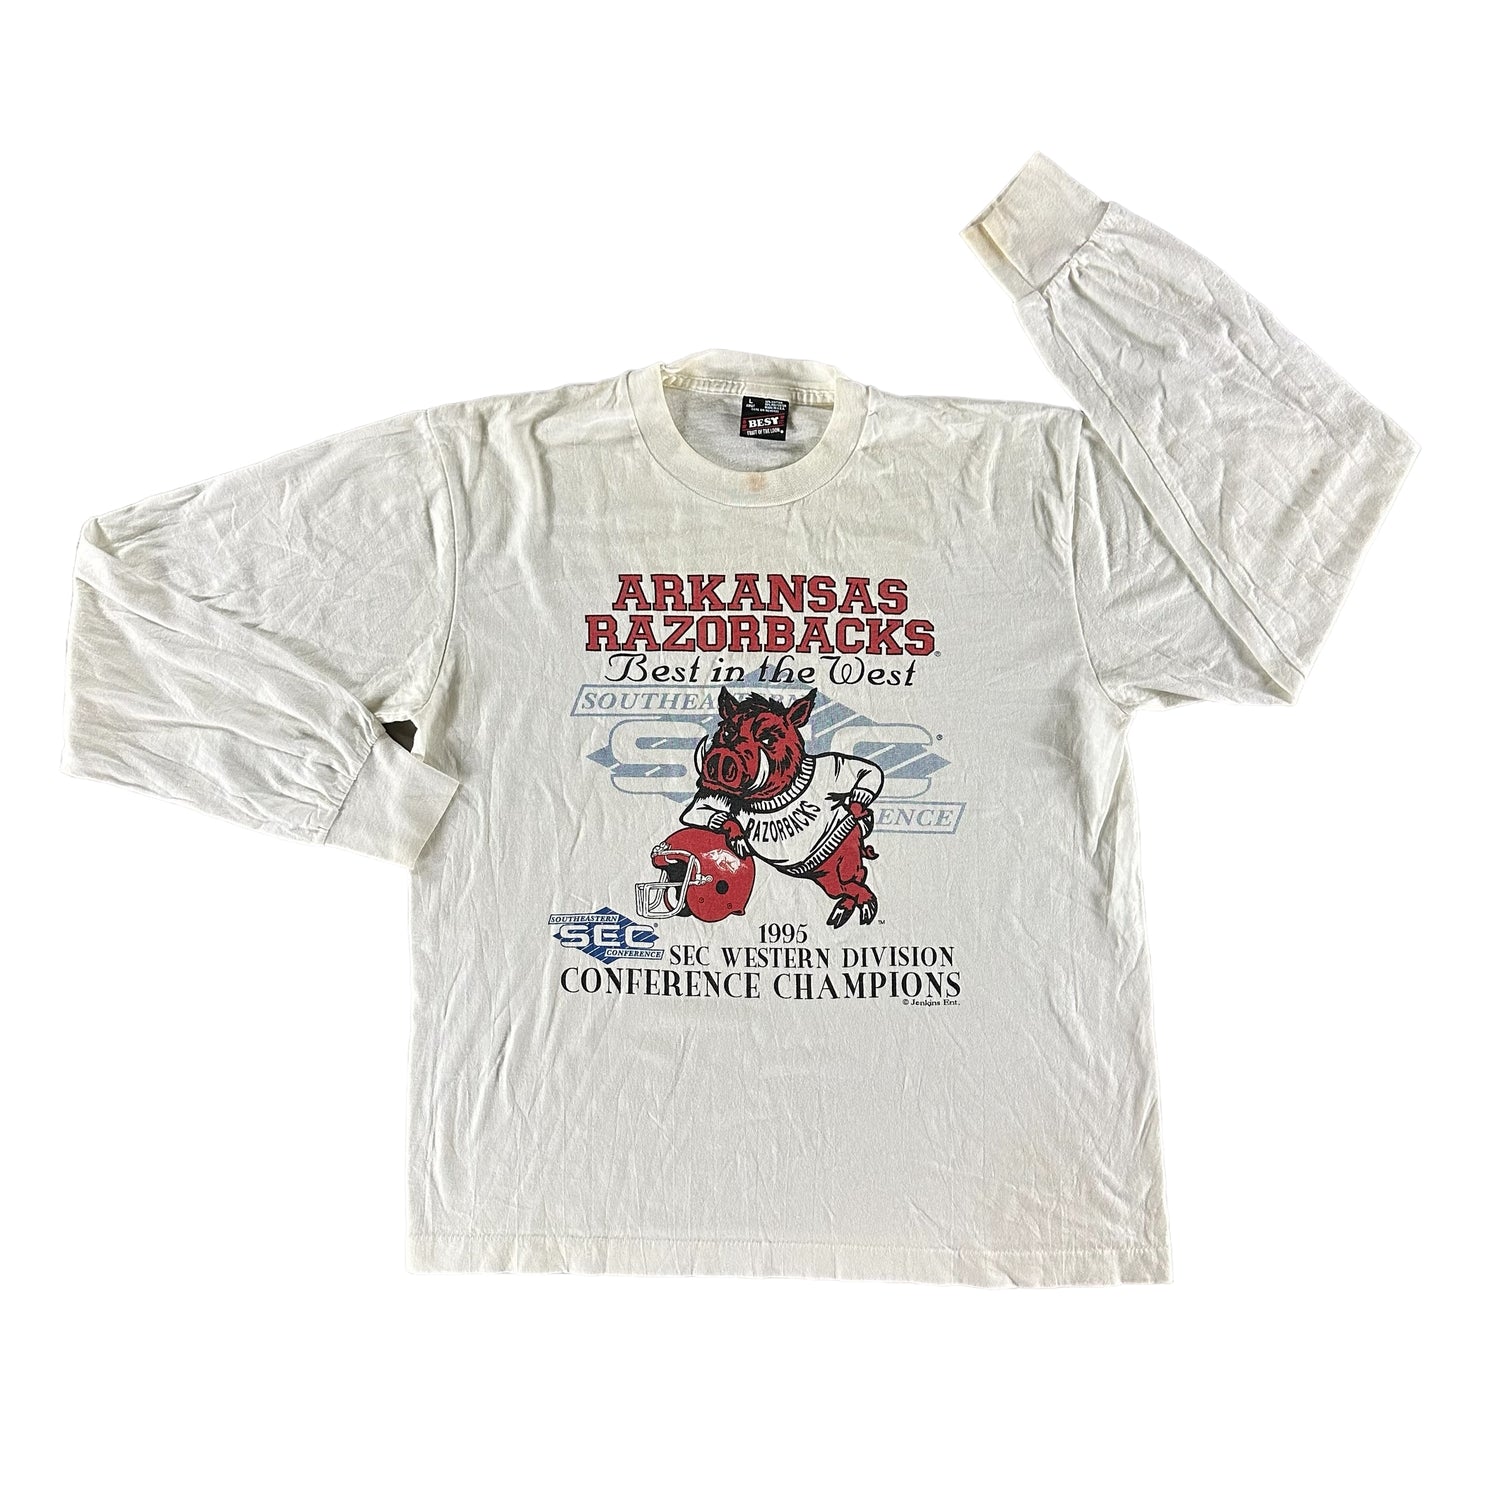 Vintage 1995 University of Arkansas T-shirt size Large